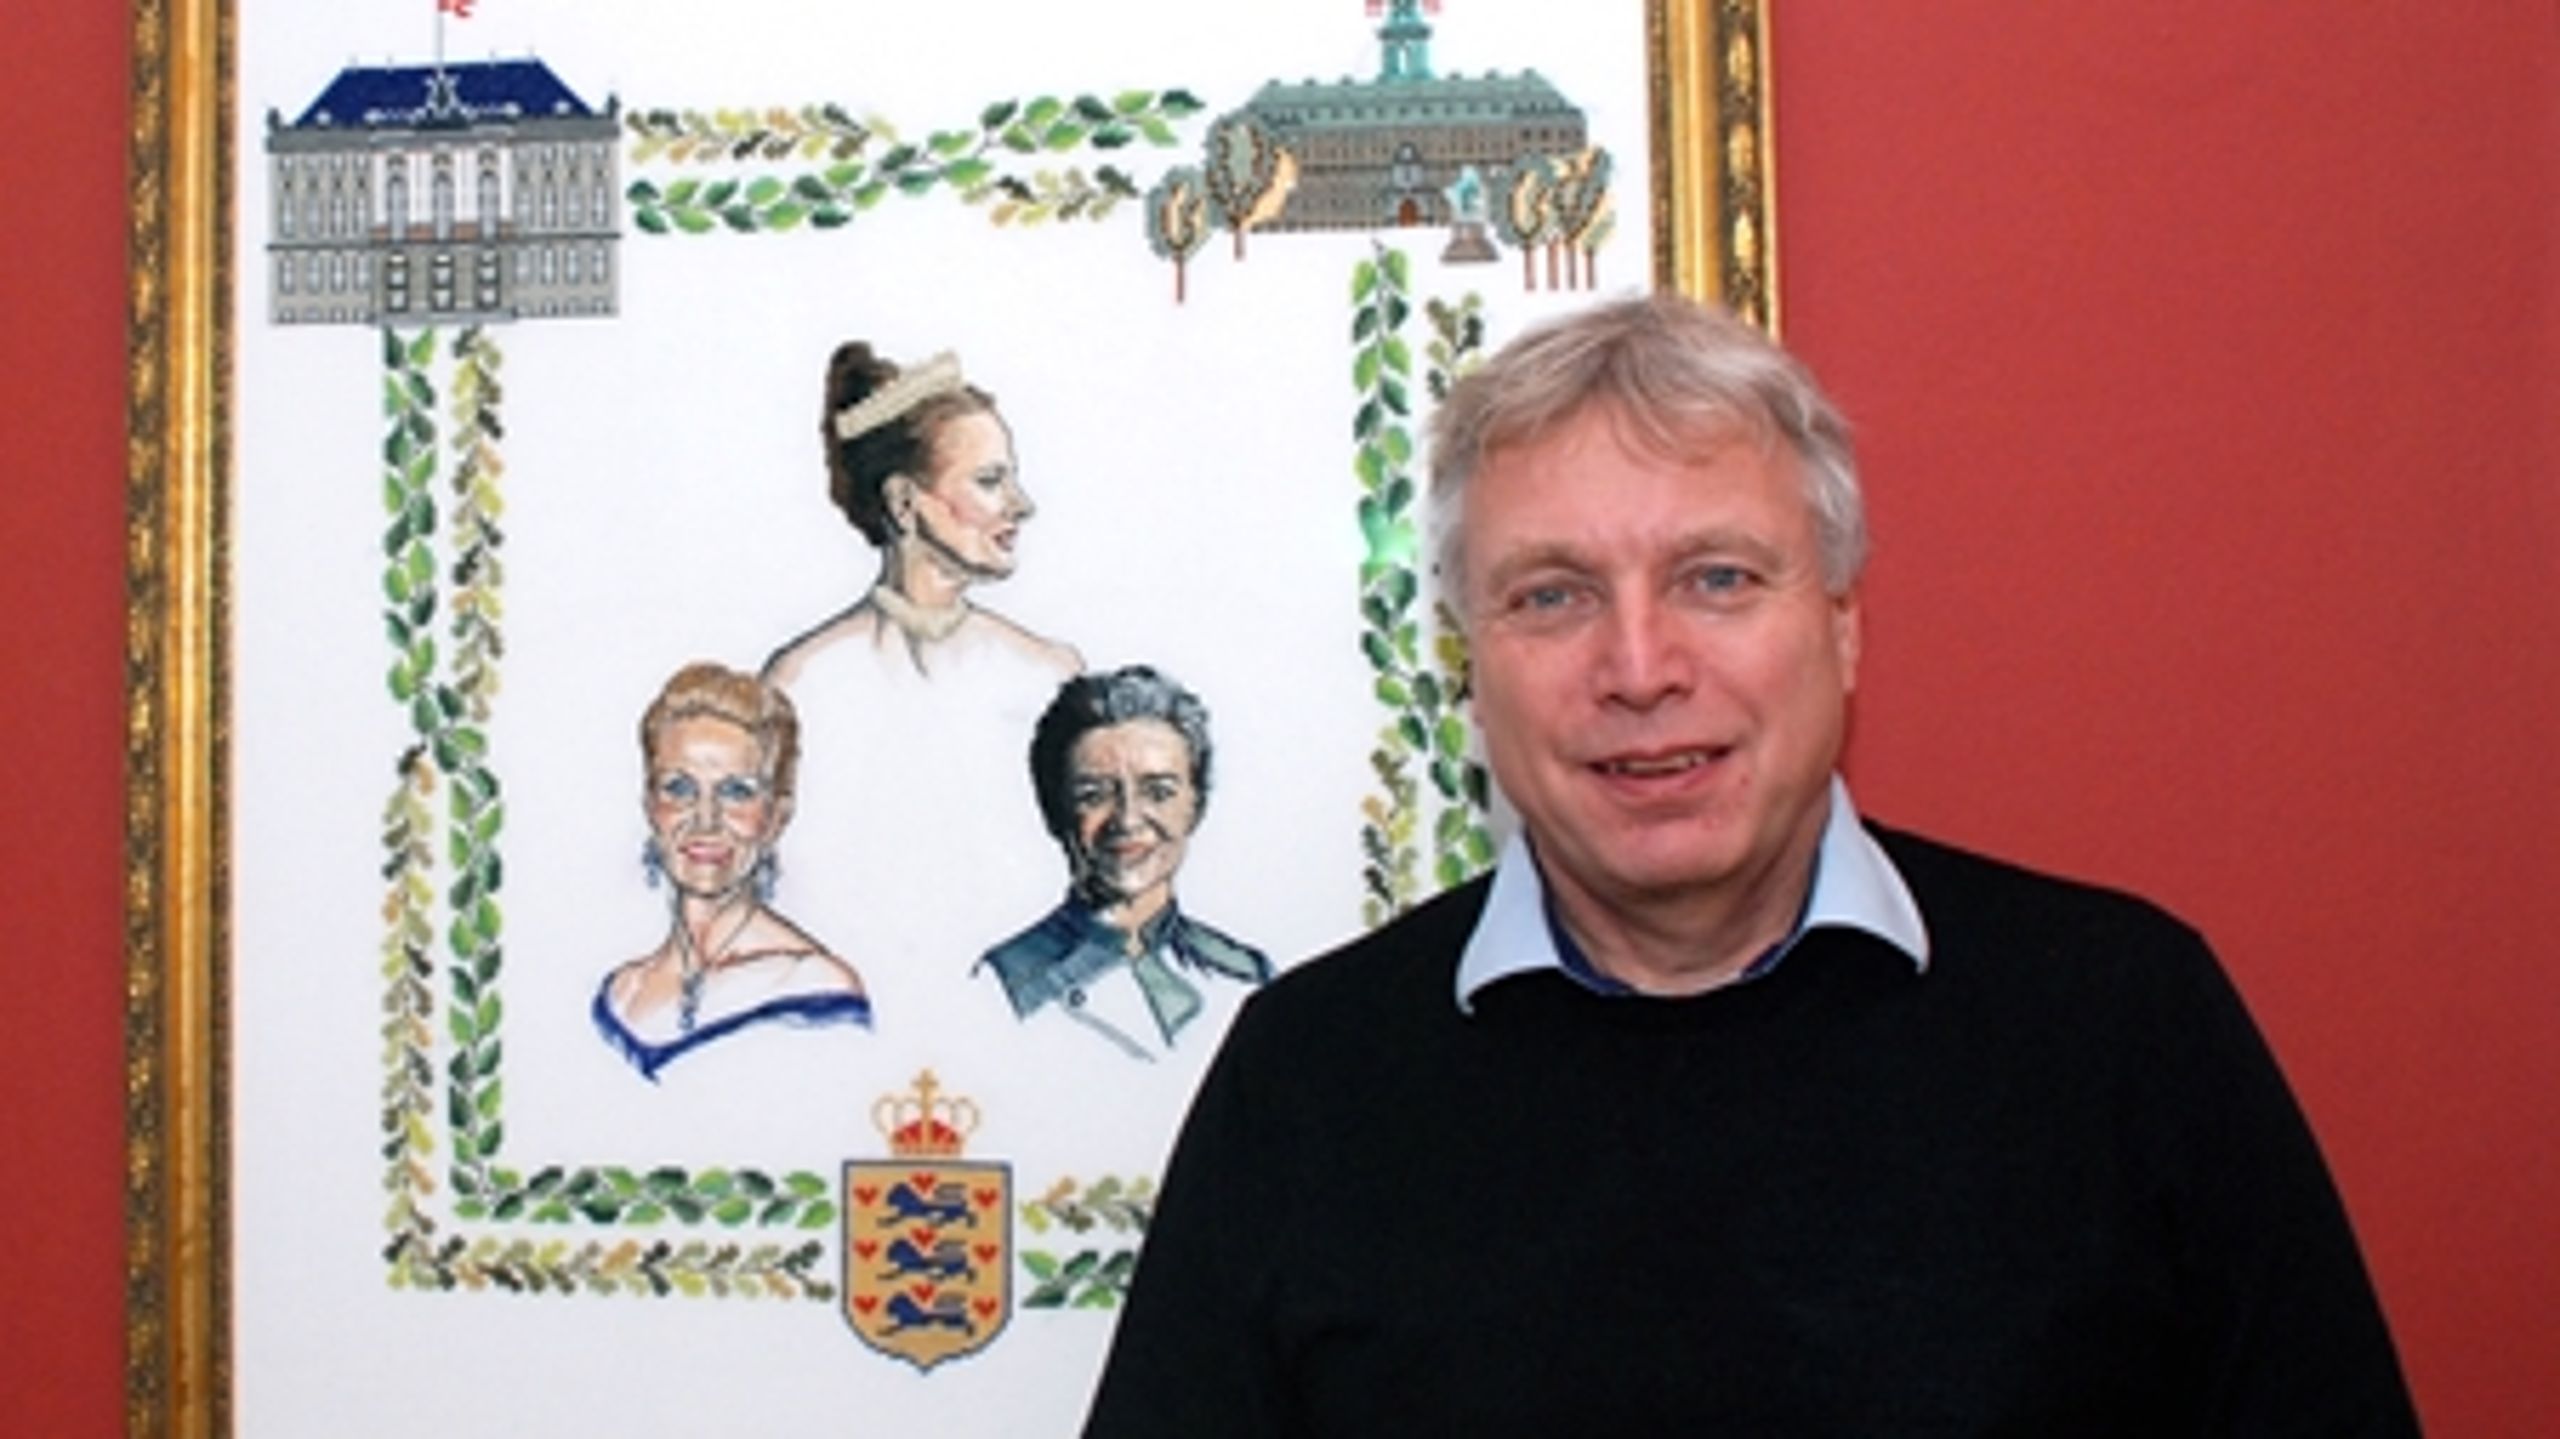 Dagens julekalenderinterview er med Uffe Elbæk, som fra oktober 2011 til december 2012 var kulturminister.